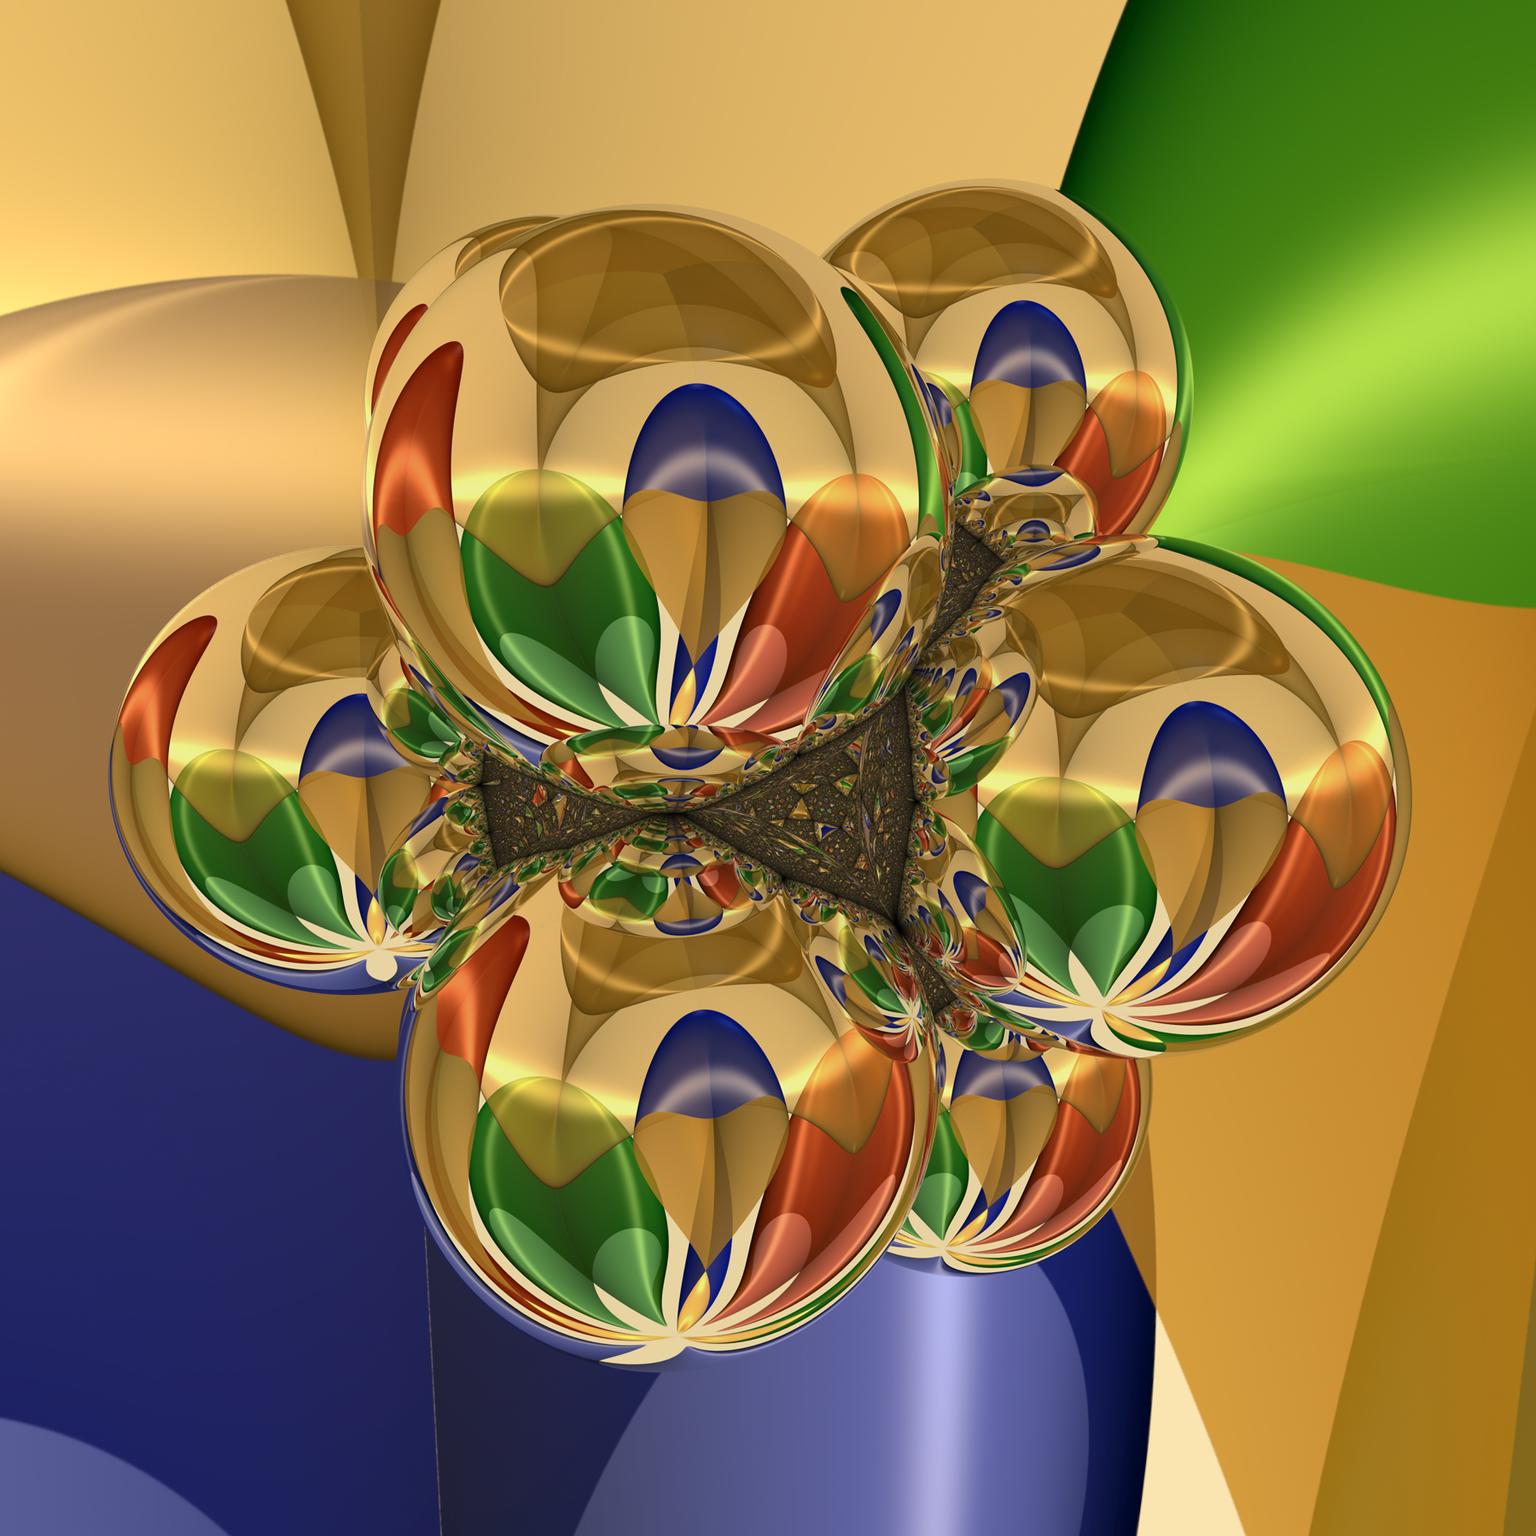 Image for entry 'Fractal Icosahedron'